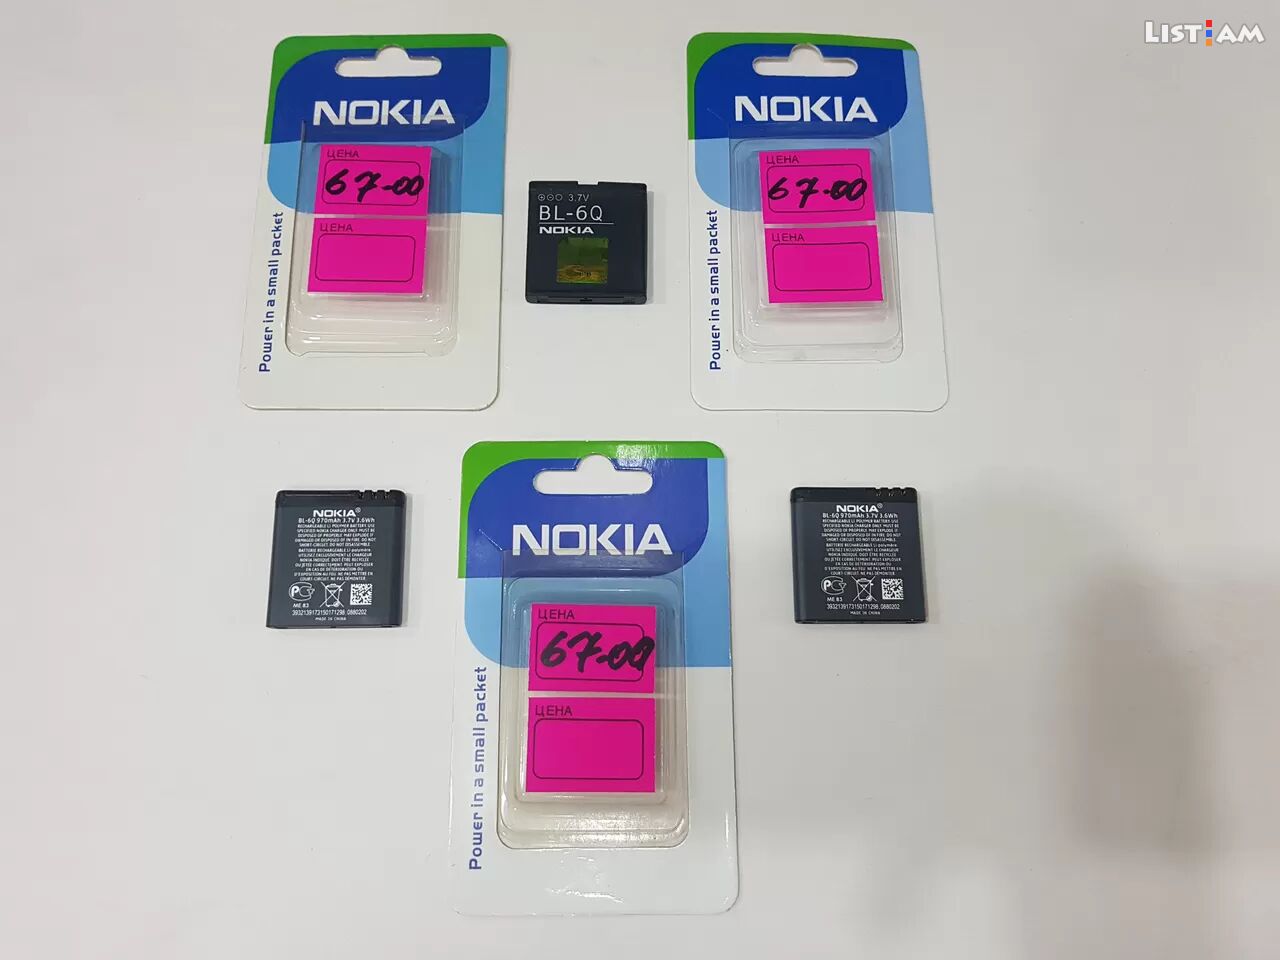 Nokia 6700 battery